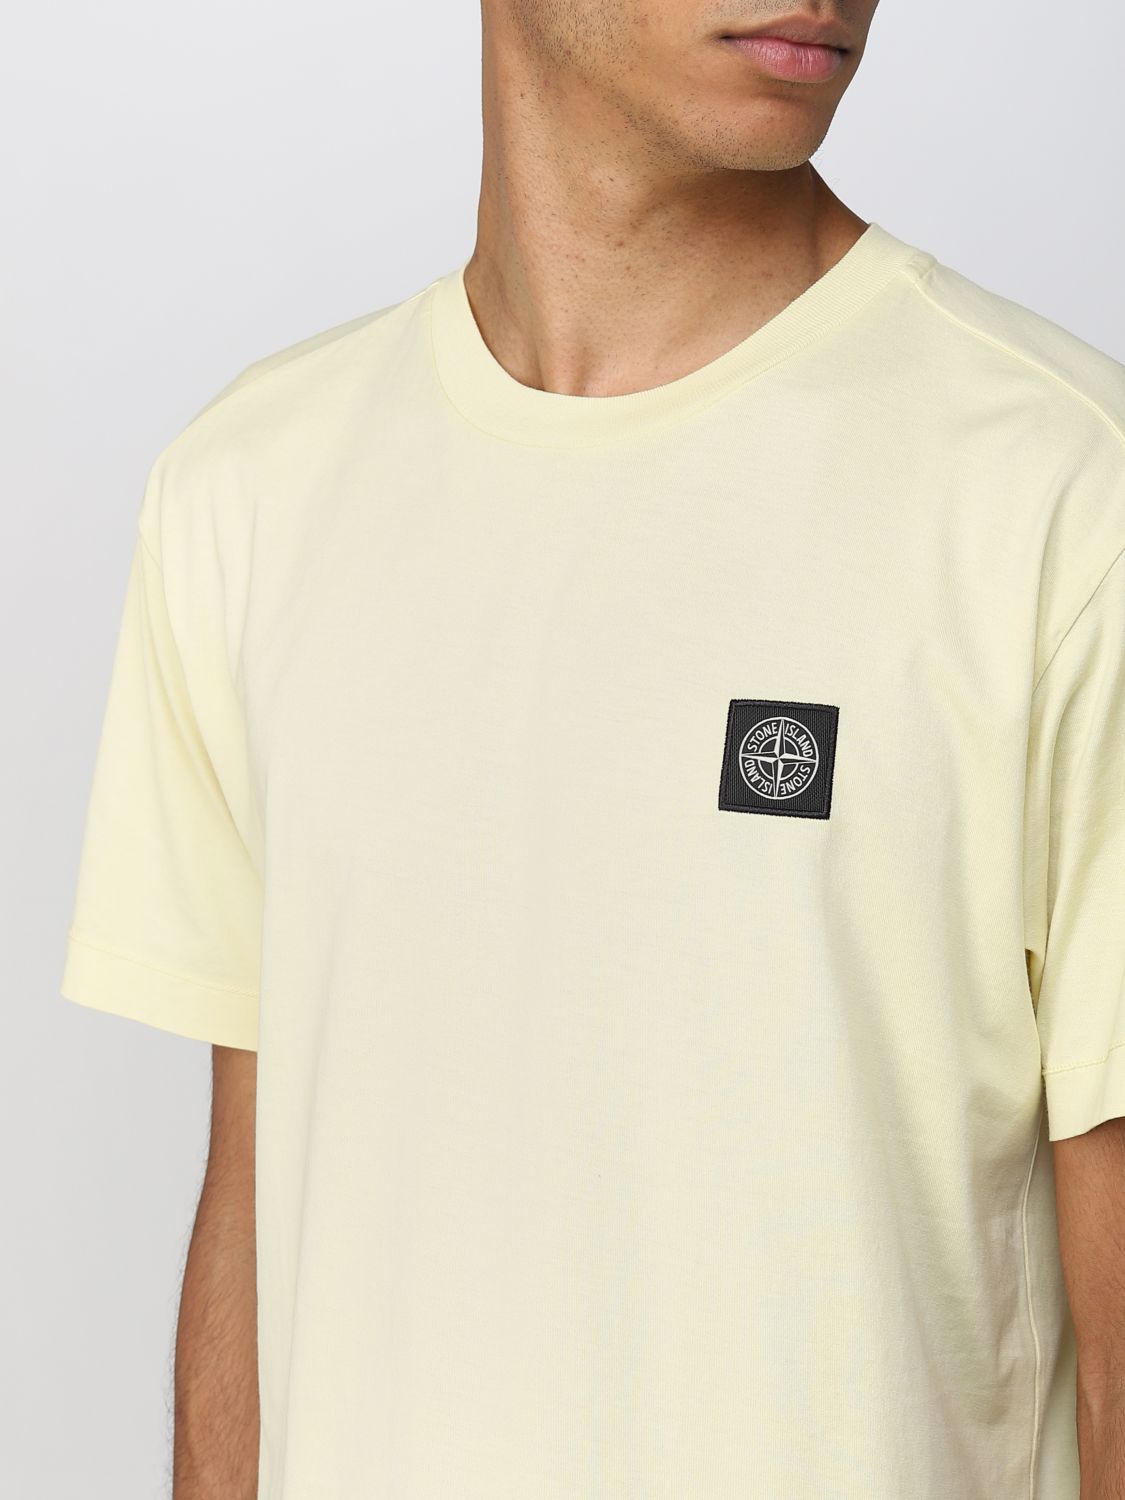 T-shirt Stone Island: Stone Island t-shirt for men straw yellow 5